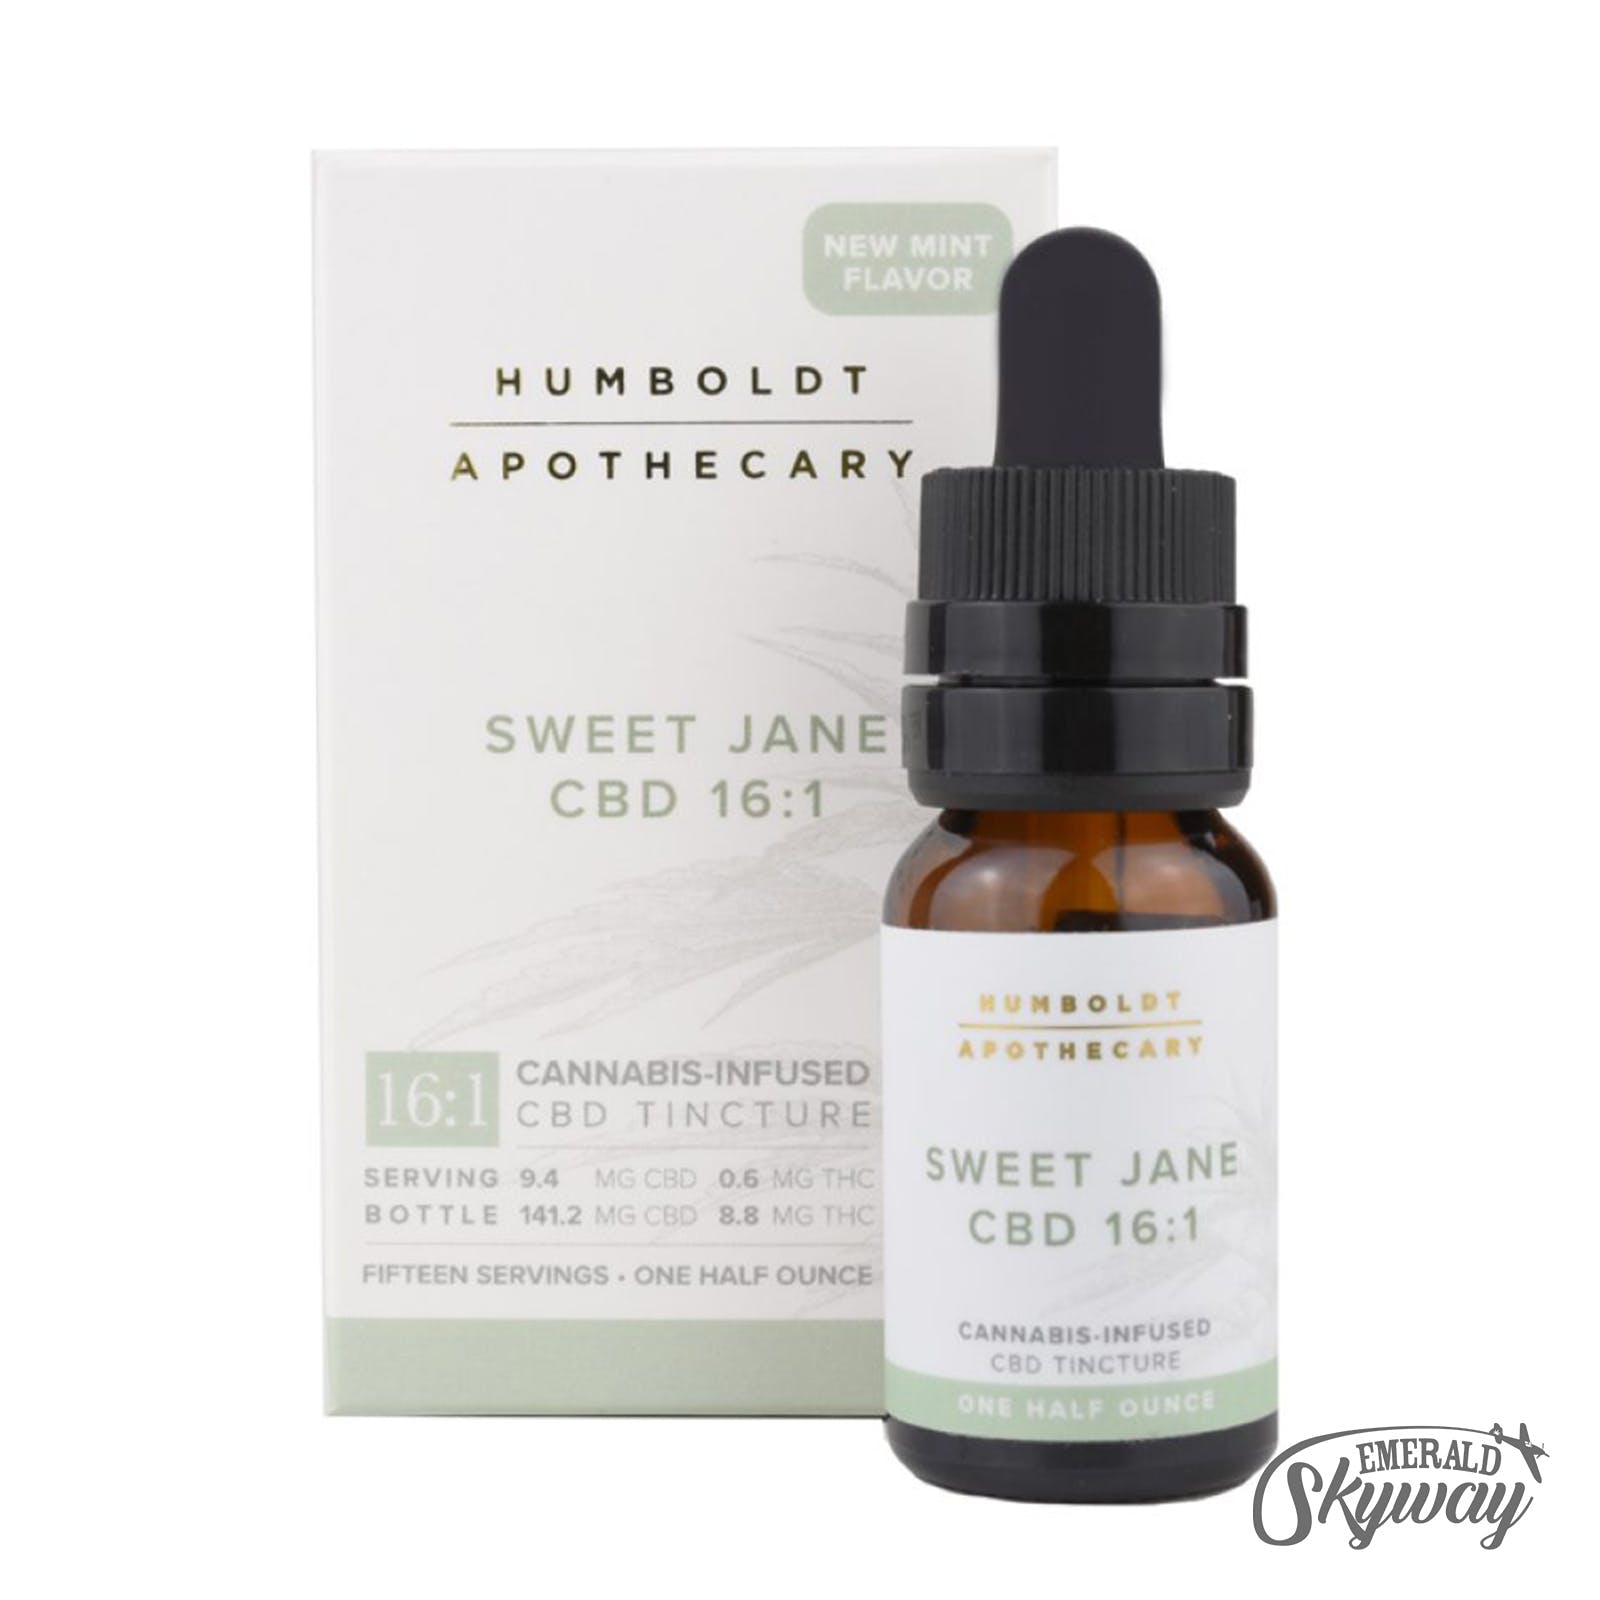 Humboldt Apothecary: Sweet Jane CBD 16:1 - 0.5oz